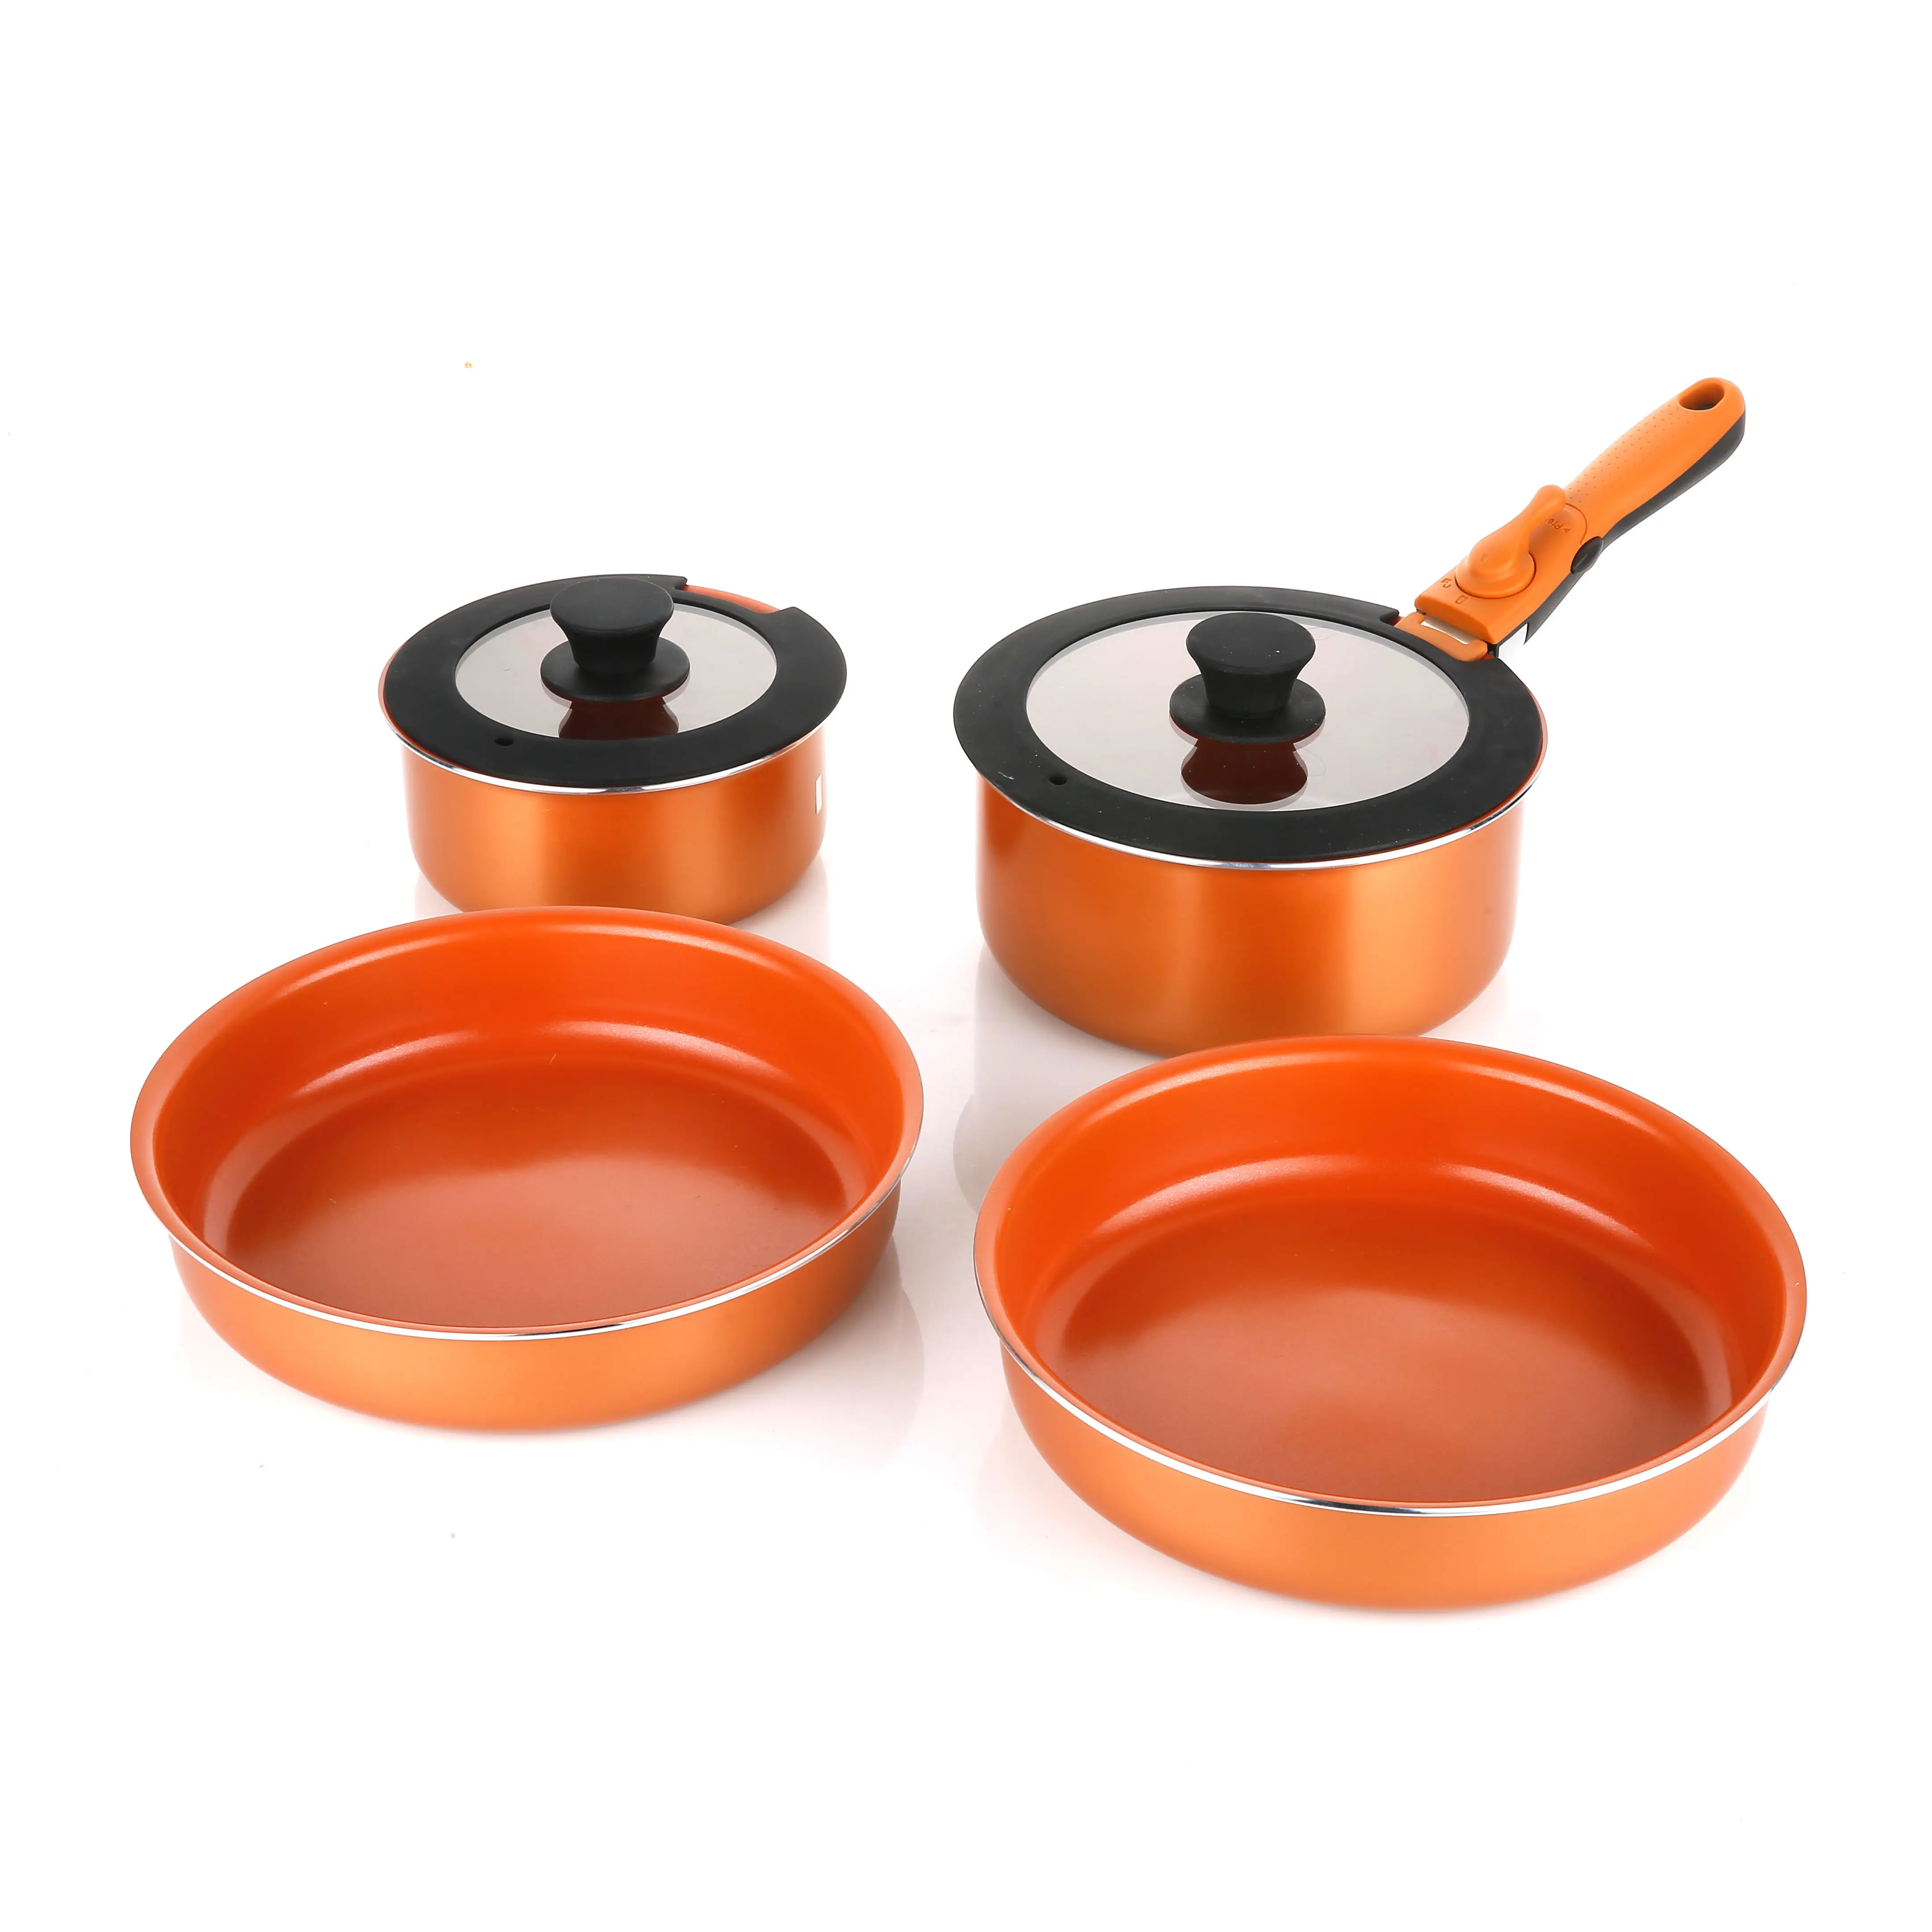 4PCS Ceramic Nonstick Cookware Set with Detachable Handle Orange Space-Saving Pan